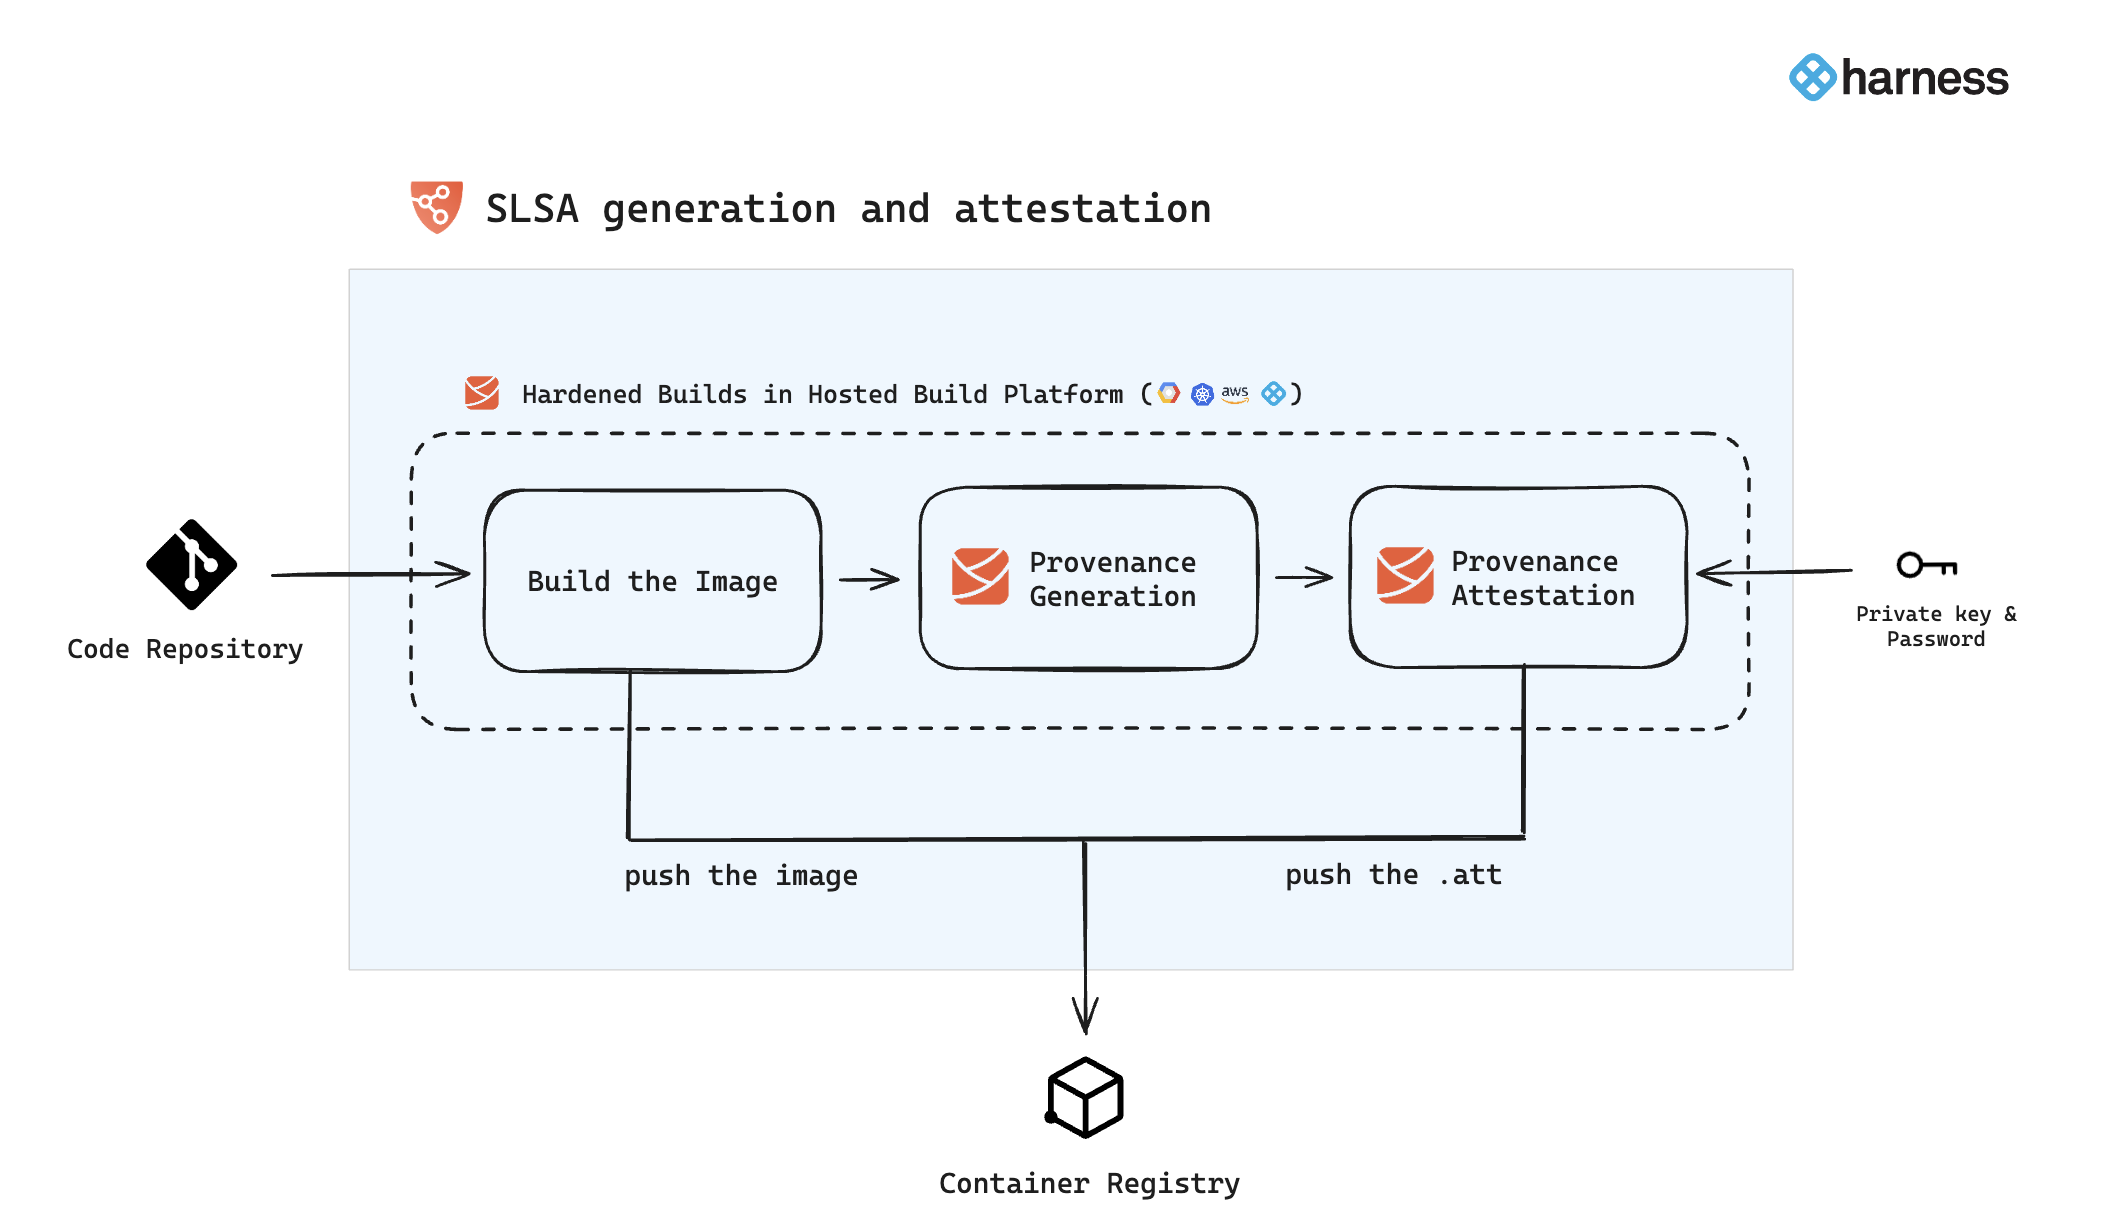 SLSA Generation overview